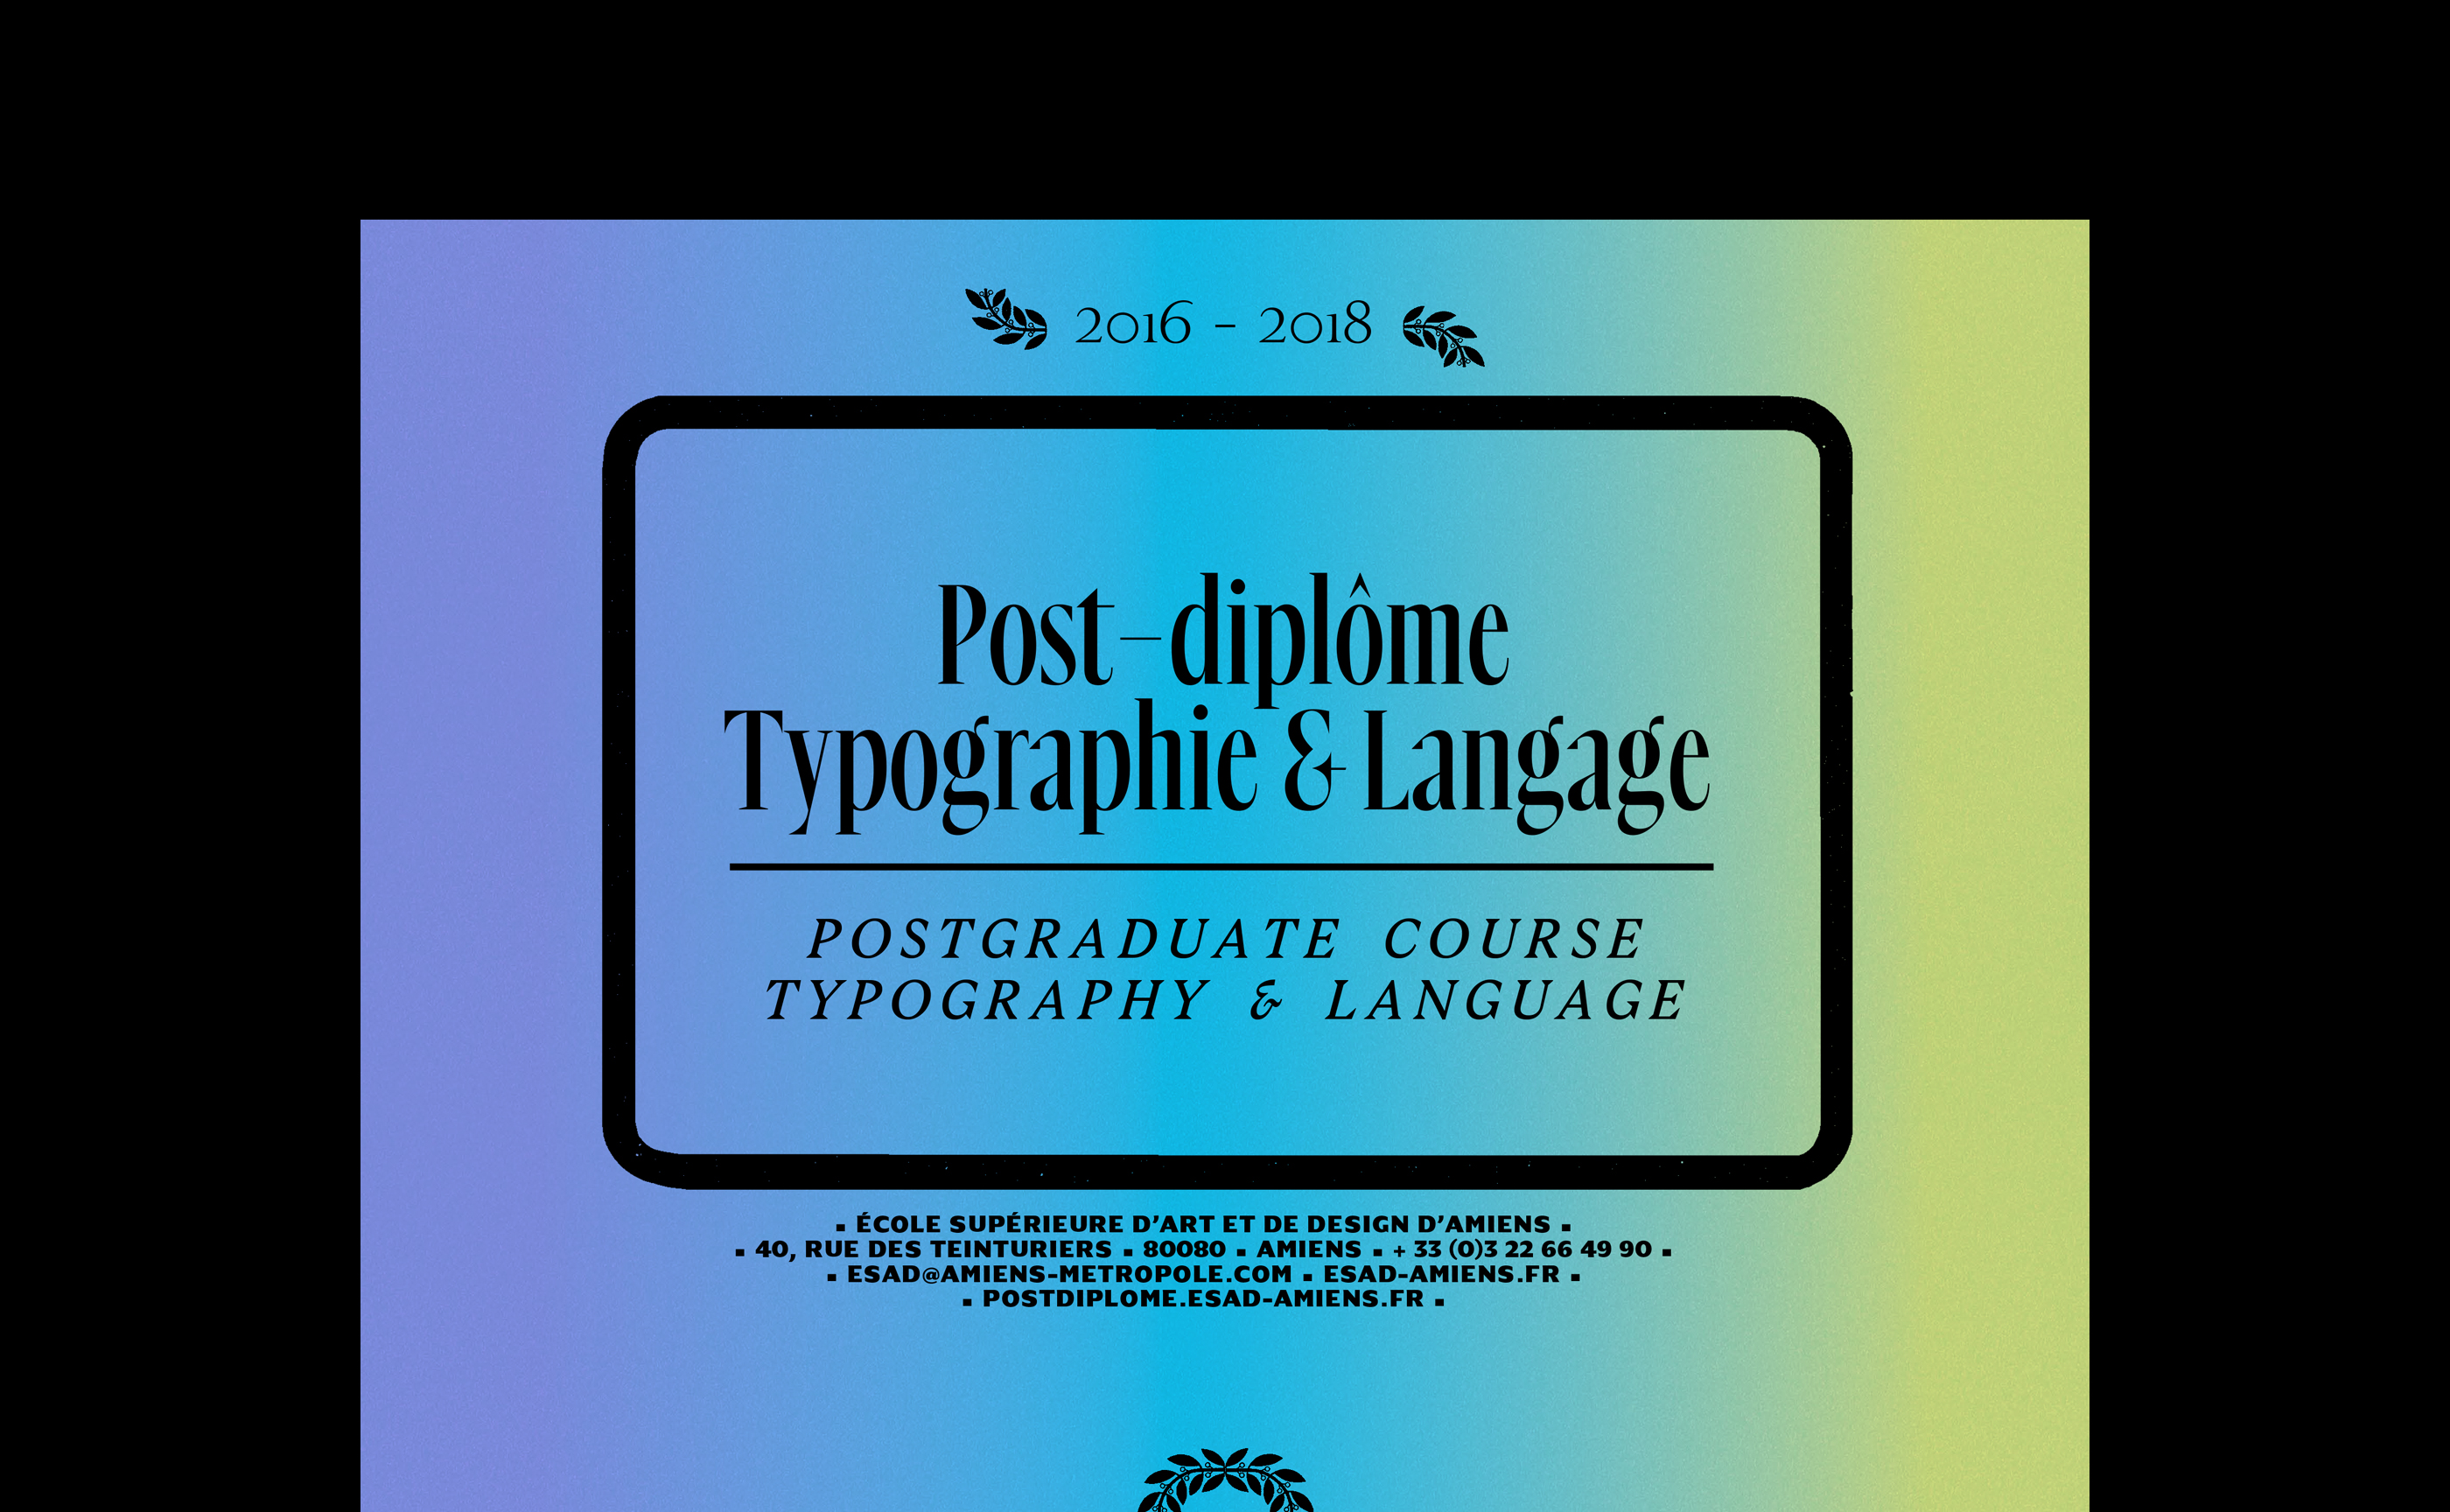 Post-diplôme typographie et langage